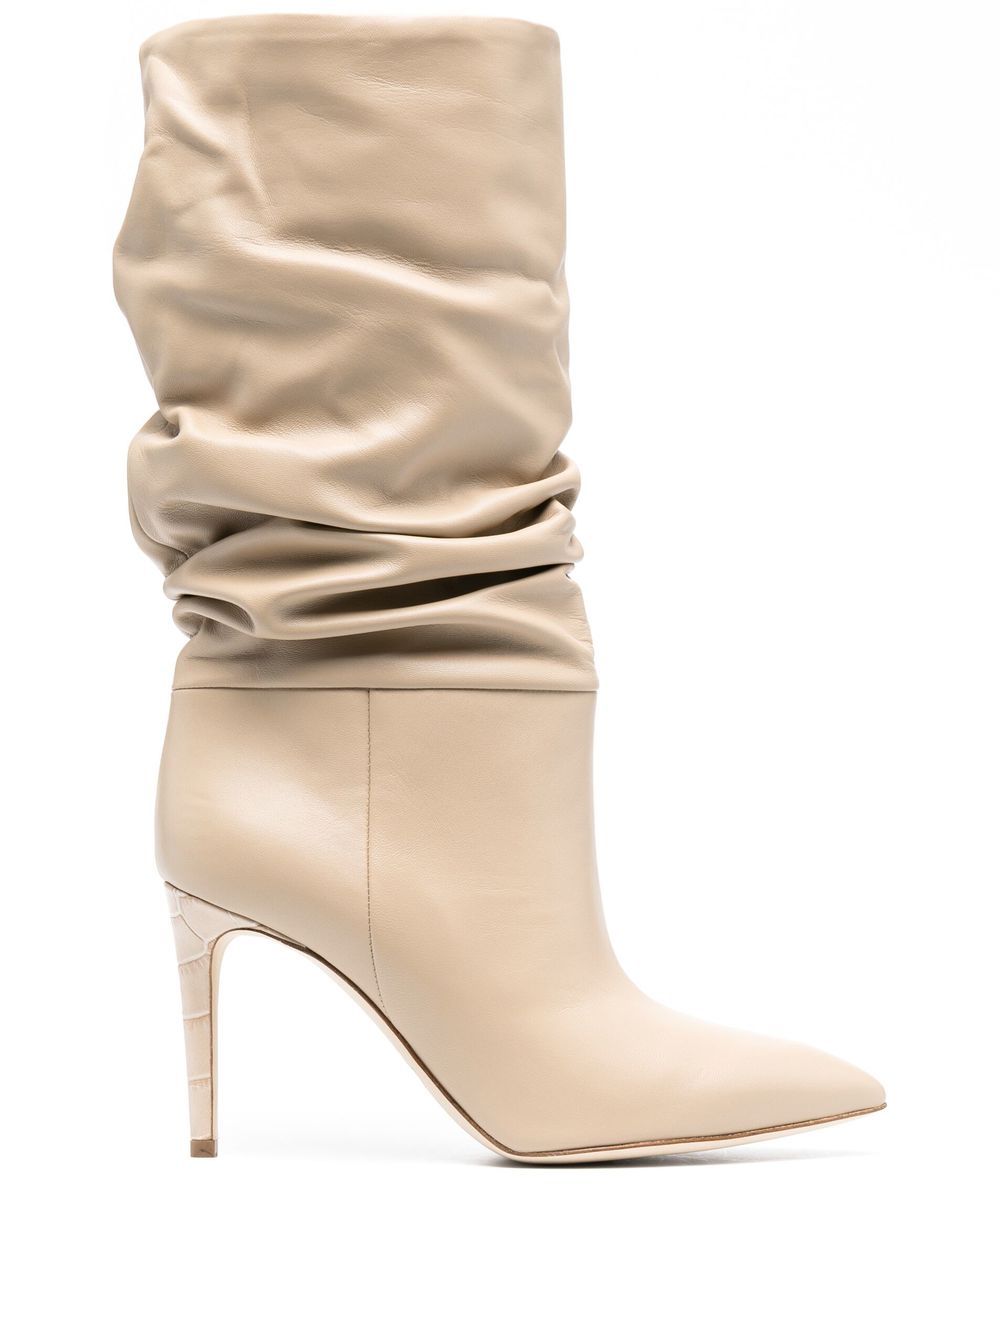 Paris TexasSlouchy Boots 85 at Fashion Clinic